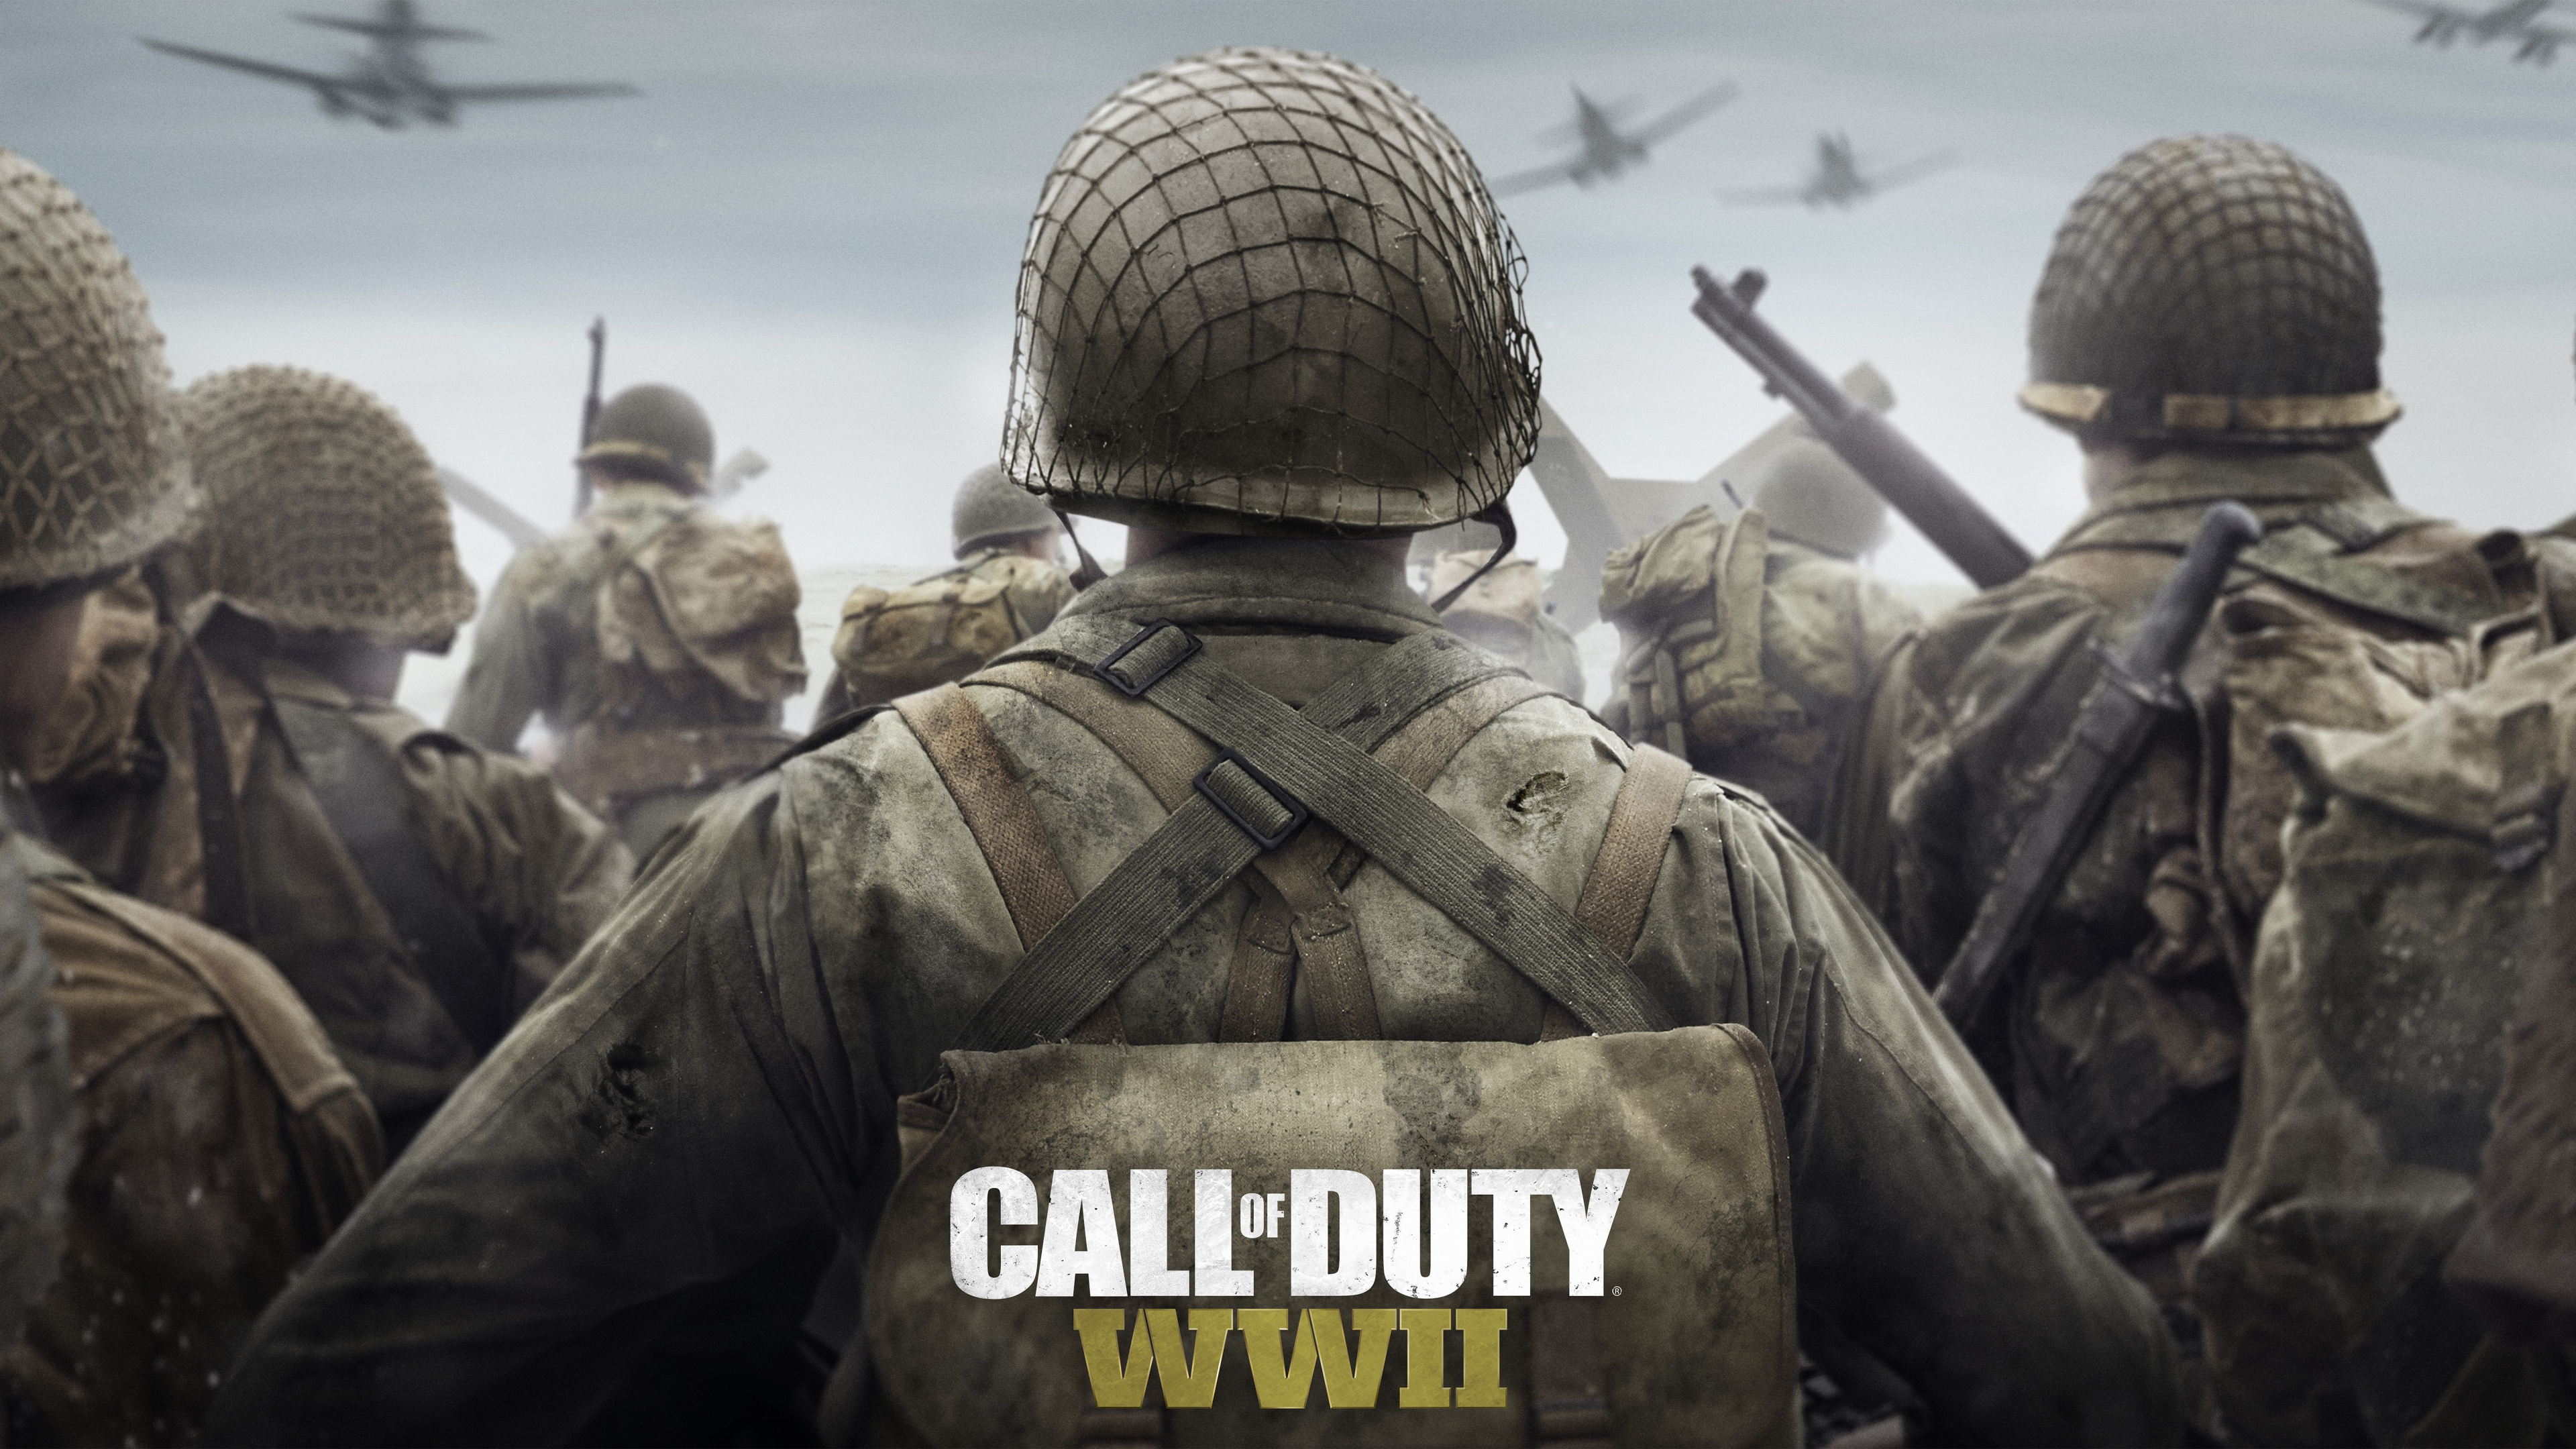 Call of Duty Ww2, Call of Duty de la Seconde GUERRE Mondiale, Activision, Sledgehammer Games, Soldat. Wallpaper in 3840x2160 Resolution